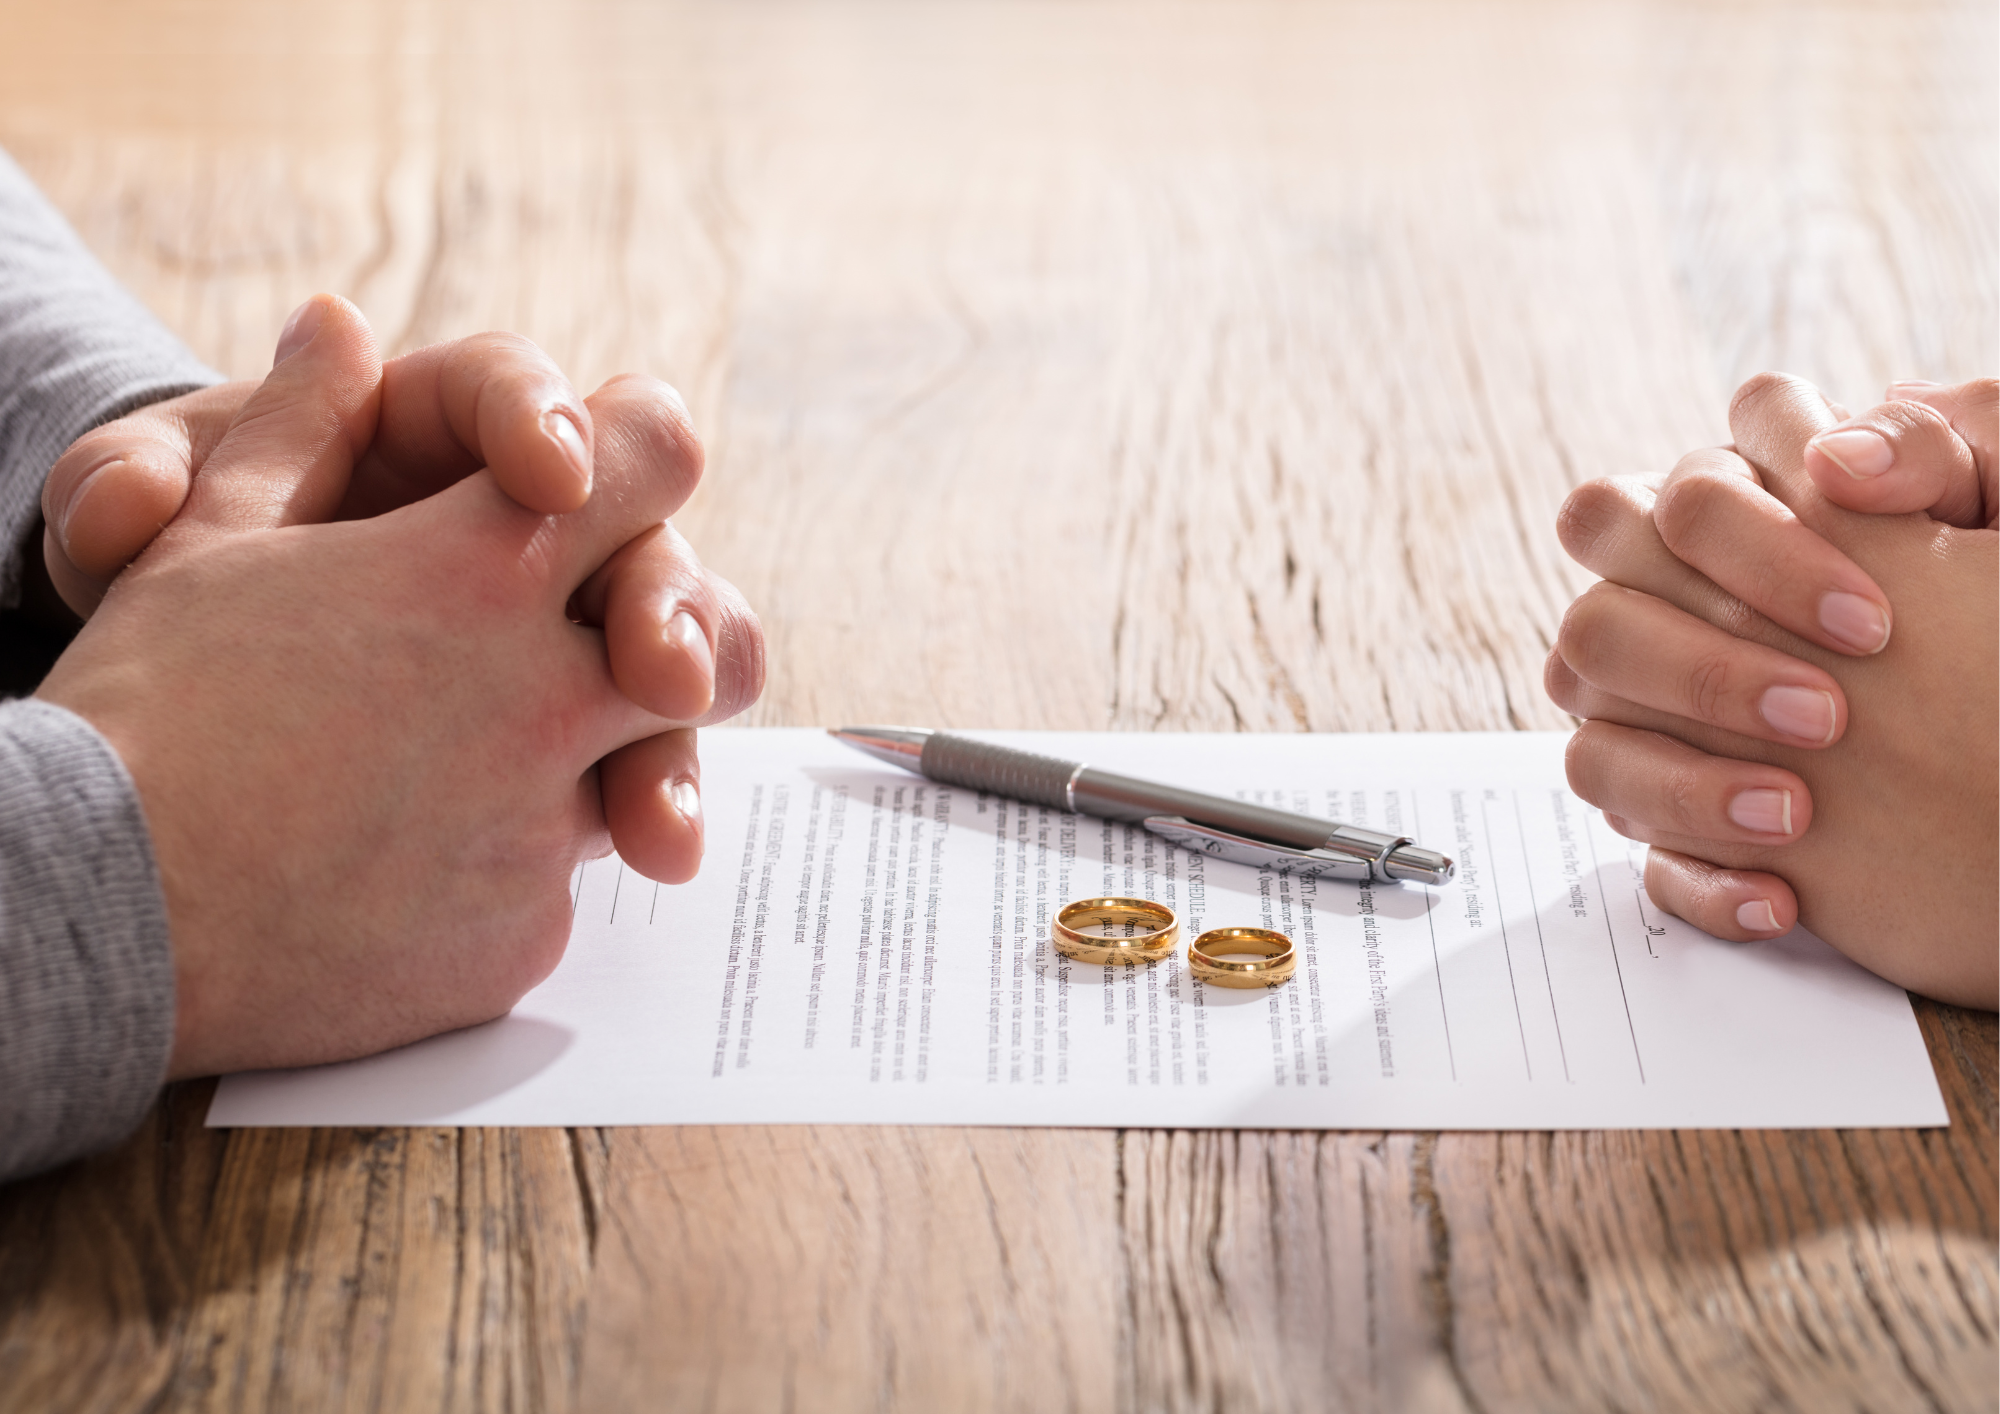 Divorce Agreement Template